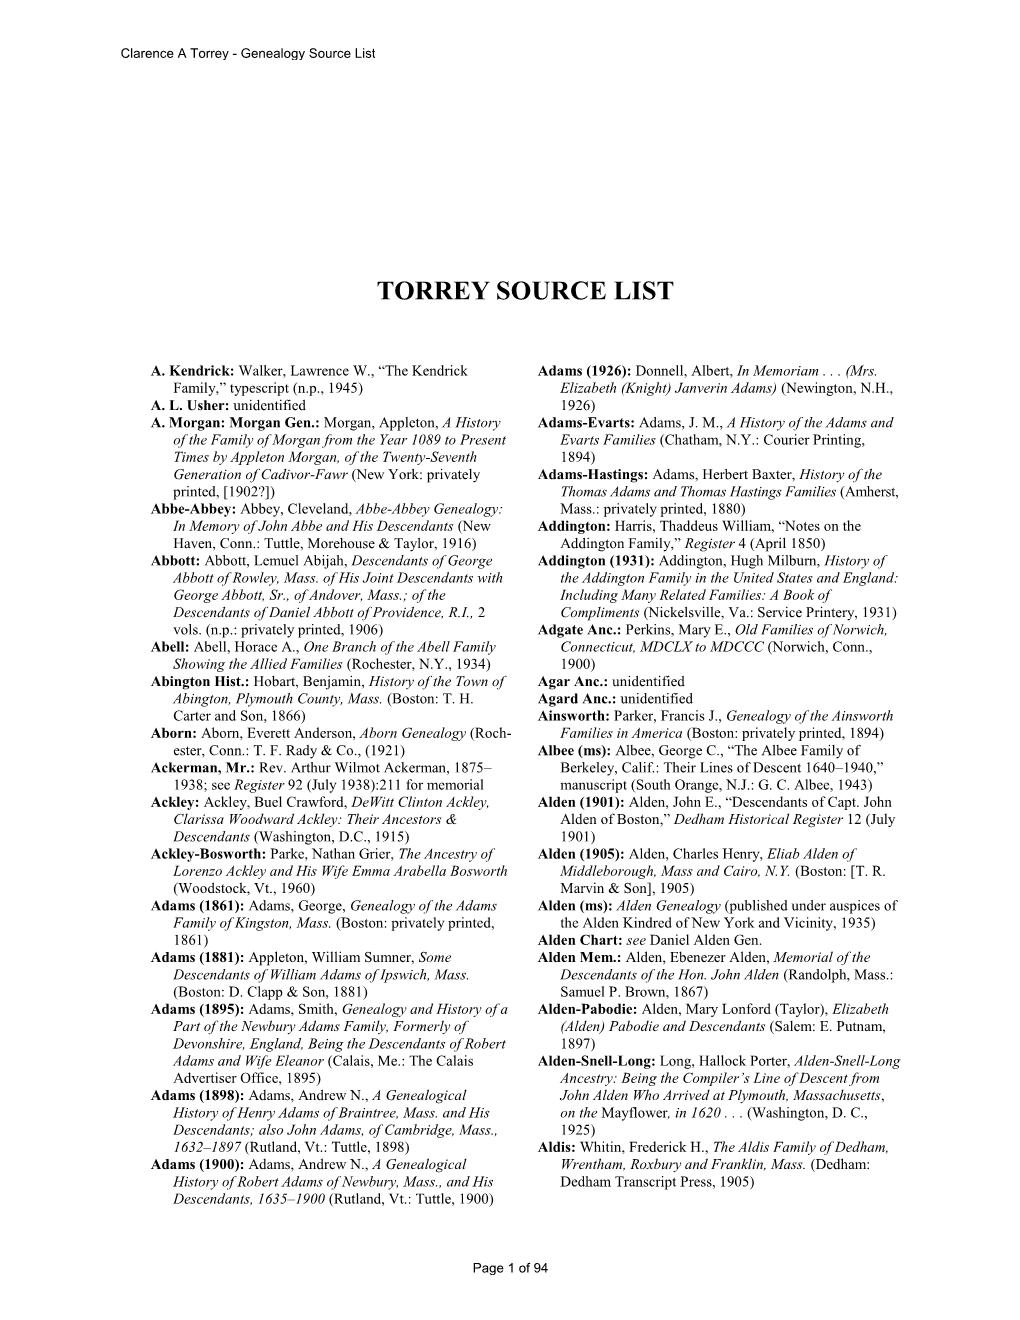 Torrey Source List